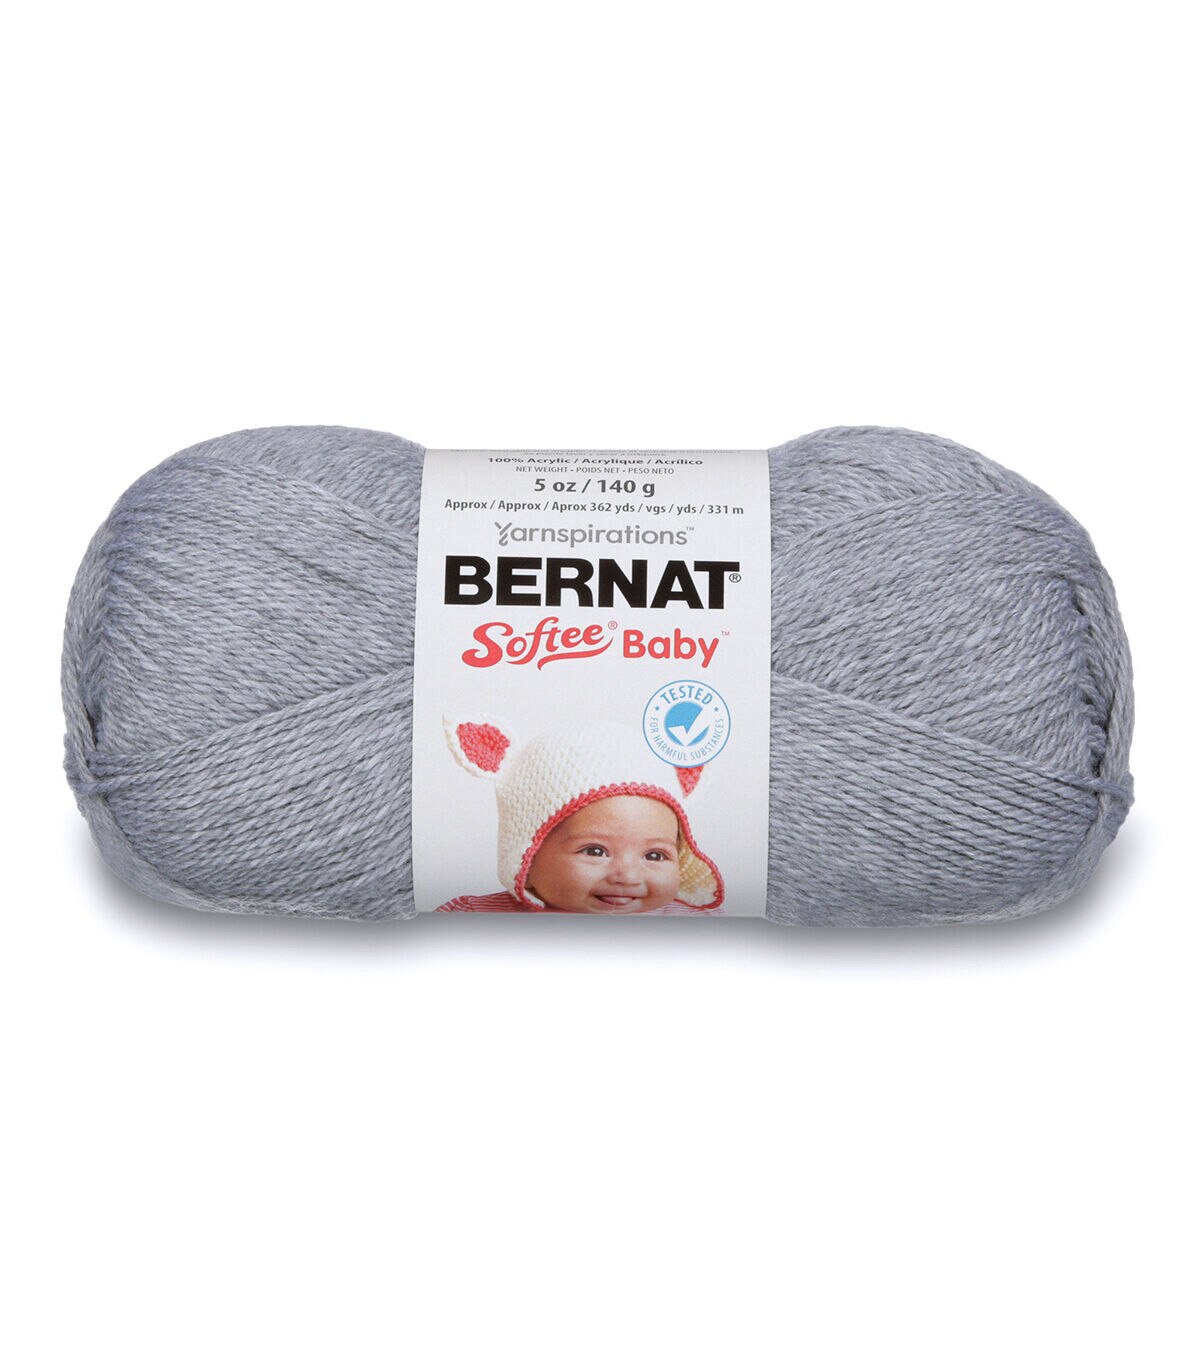 2 SKEINS/BALLS OF BERNAT SOFTEE BABY YARN BABY DENIM MARL 